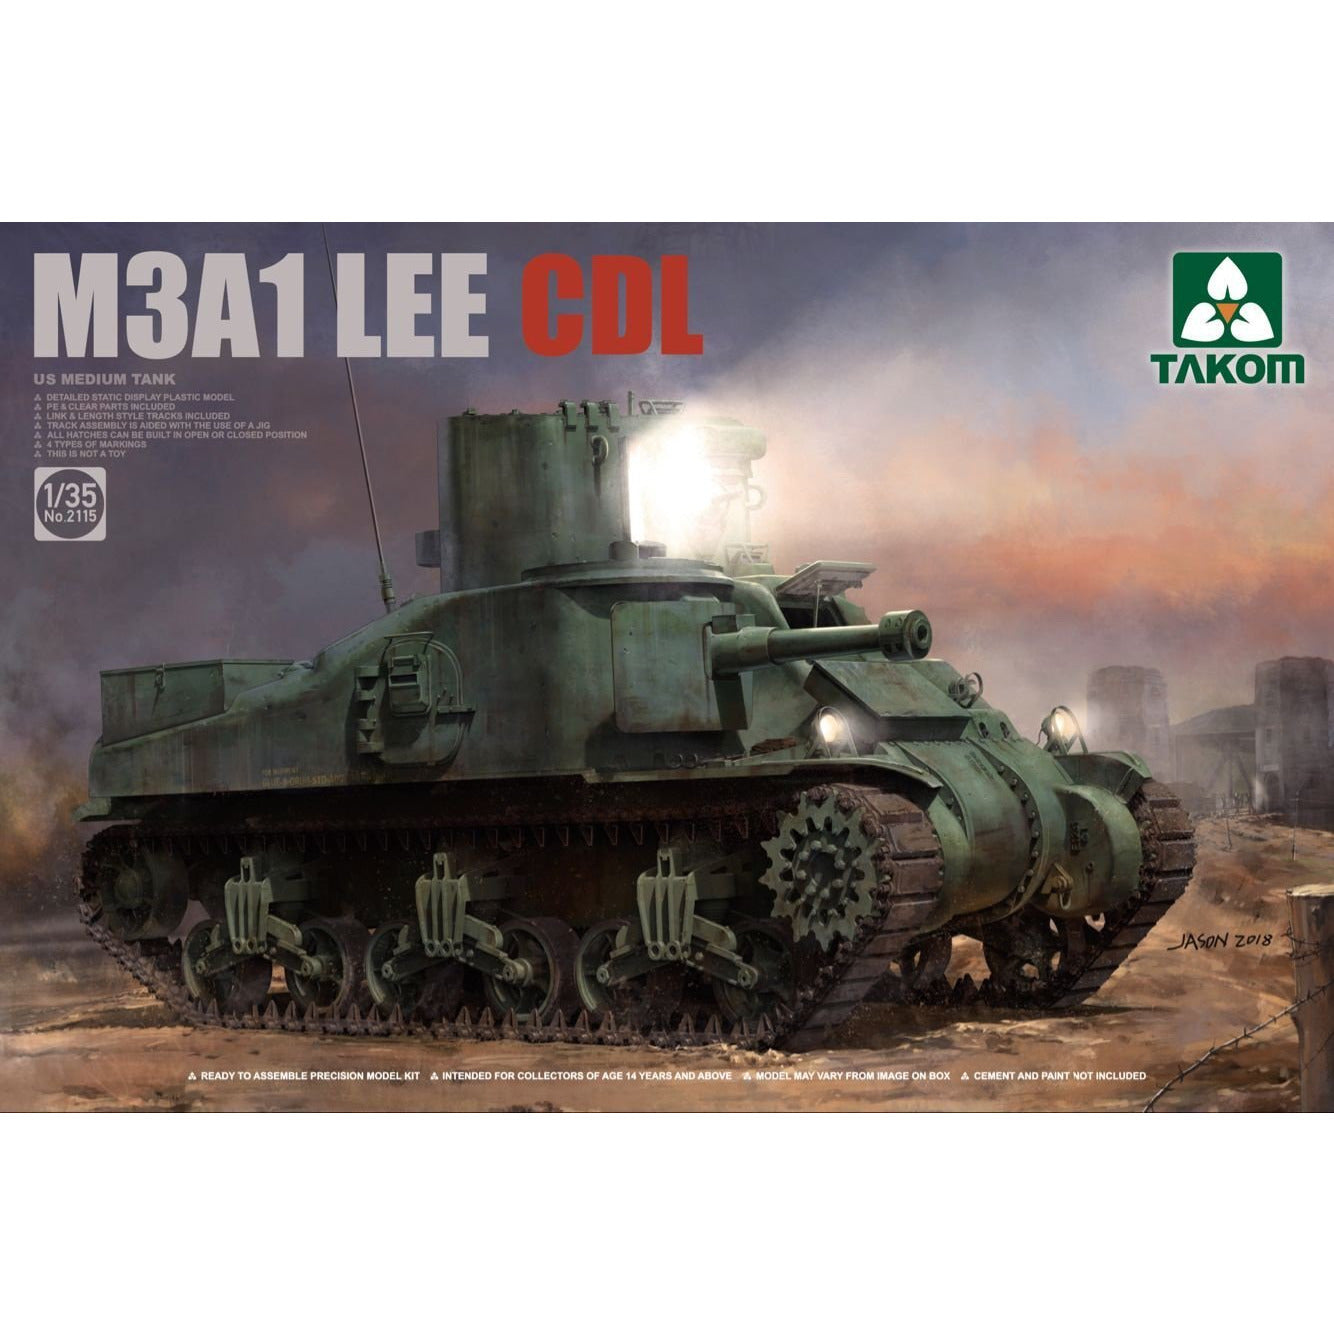 M3A1 Lee CDL 1/35 #2115 by Takom